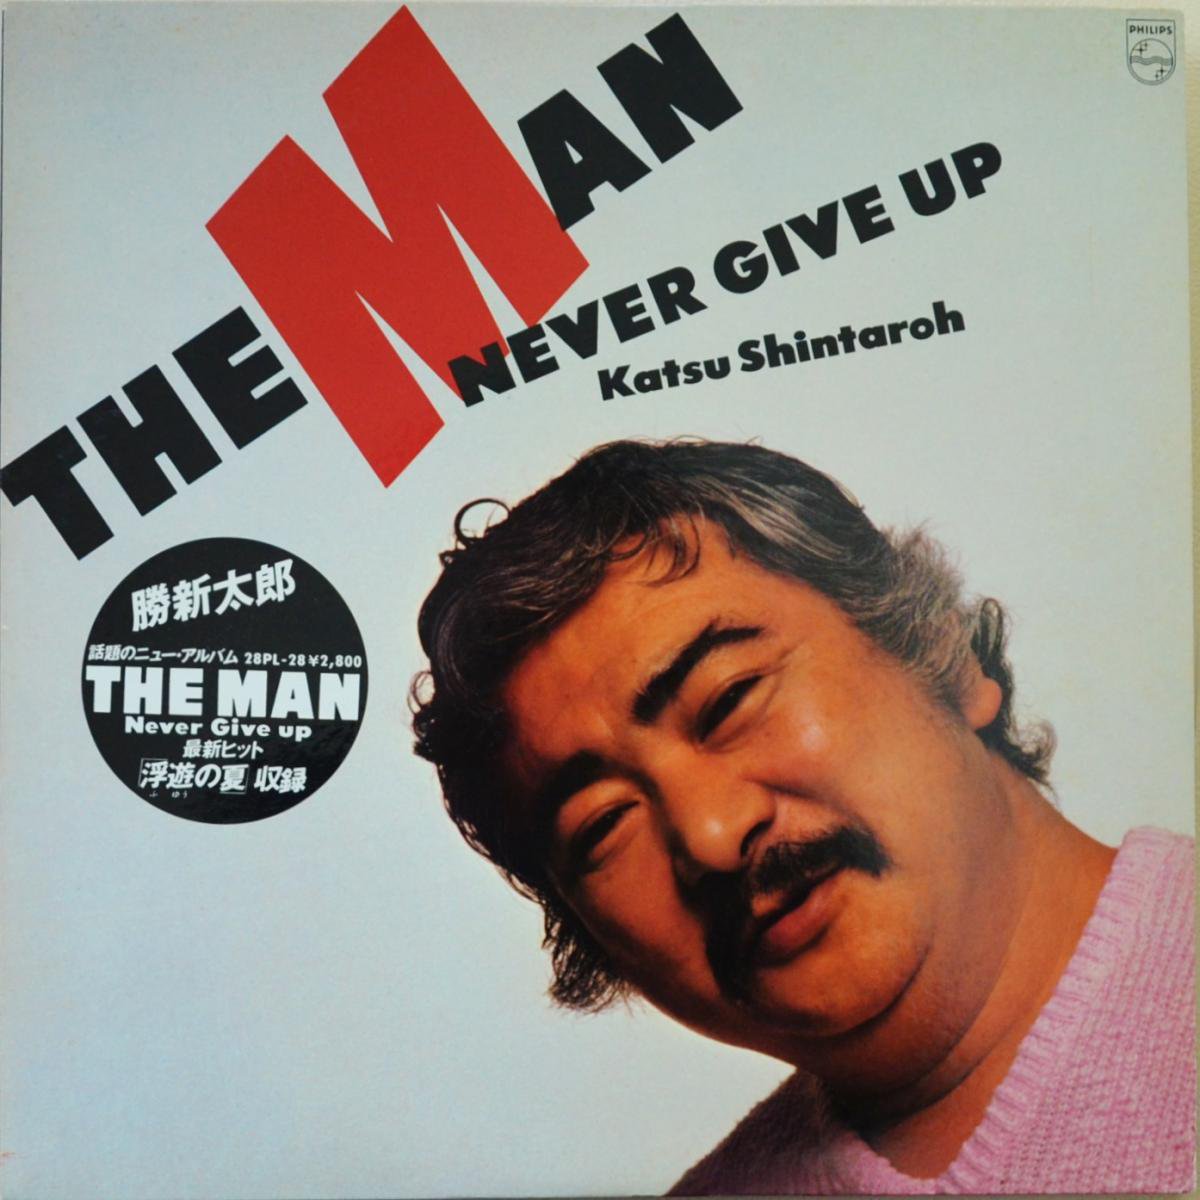 勝新太郎 KATSU SHINTAROH / THE MAN NEVER GIVE UP (LP) - HIP TANK 